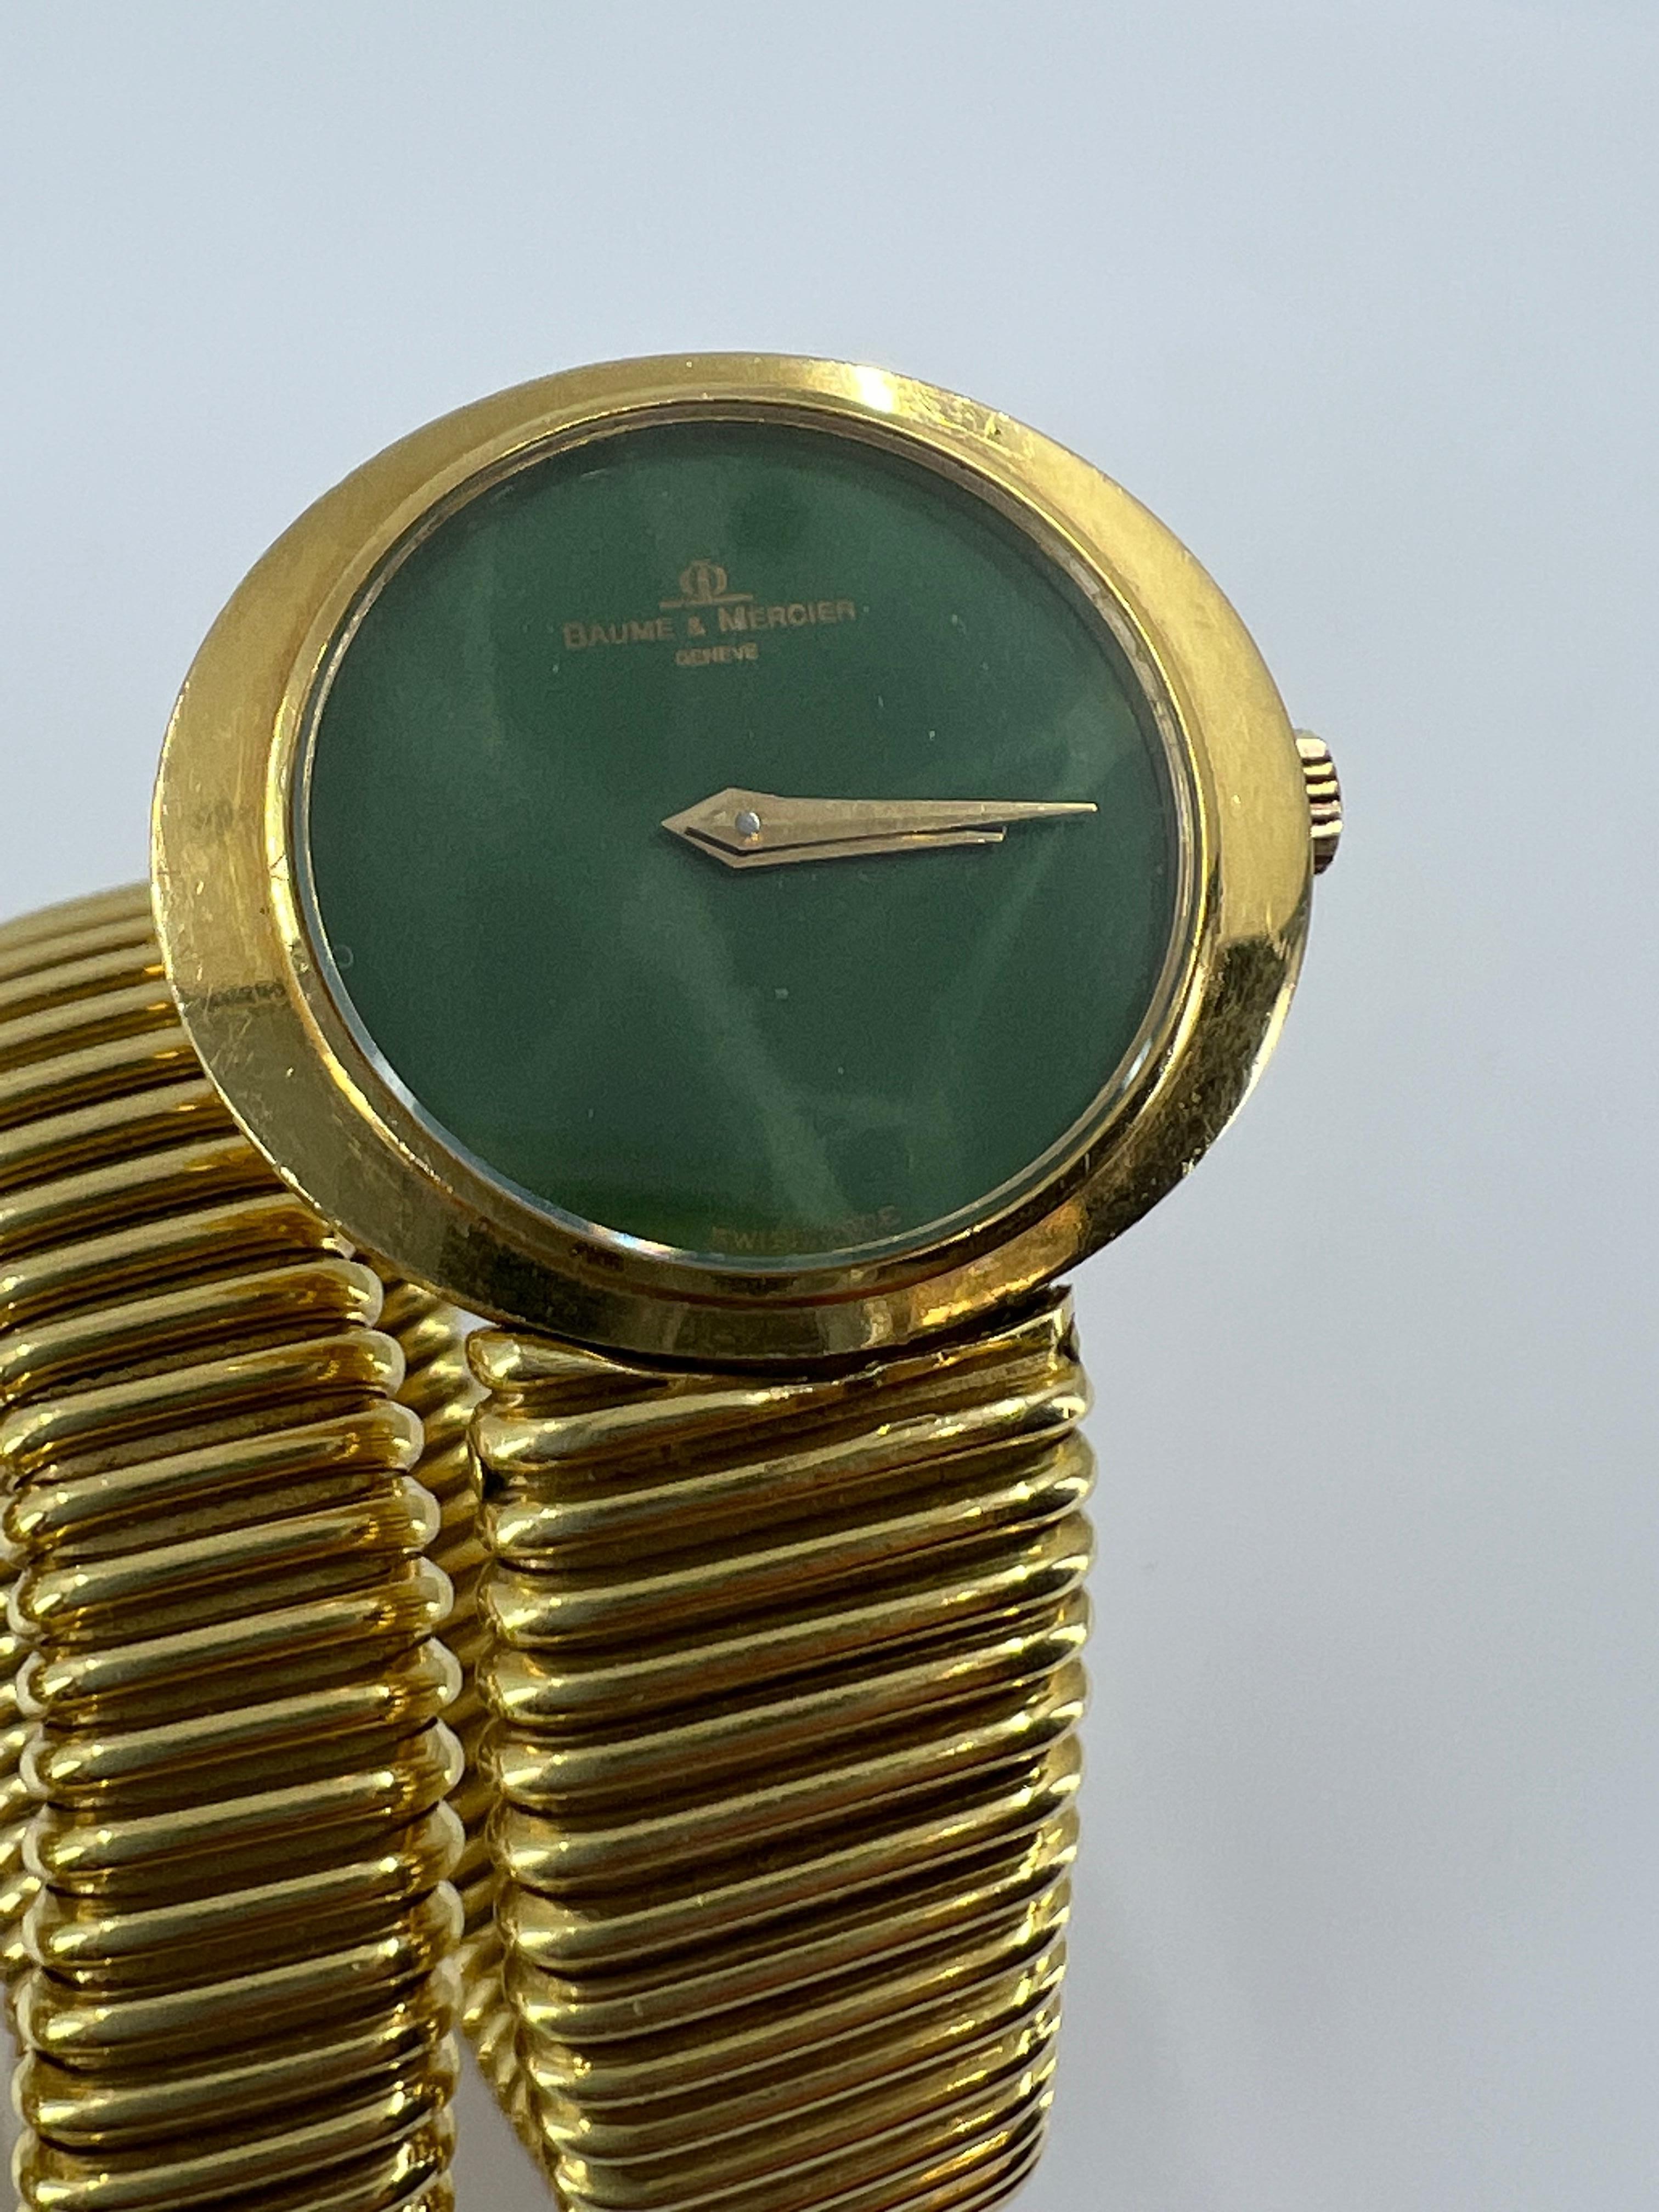 Baume & Mercier Gold Watch Tubogas 5